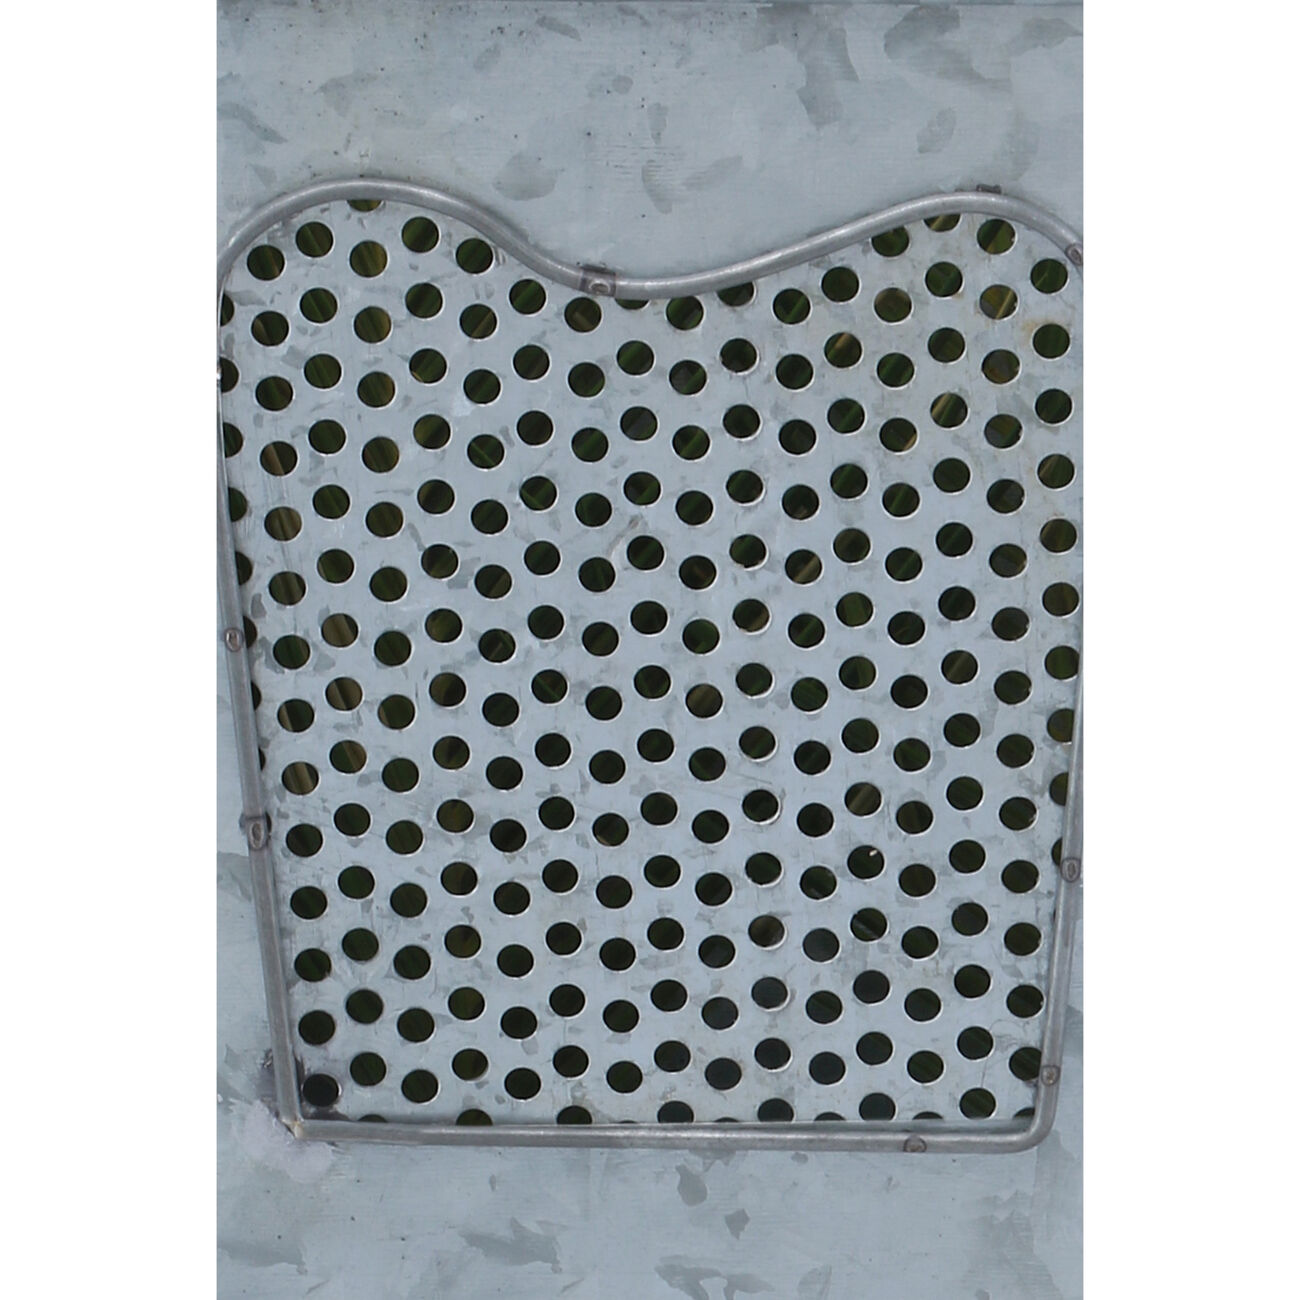 Galvanized Iron Wall Box With Towel Bar, Gray